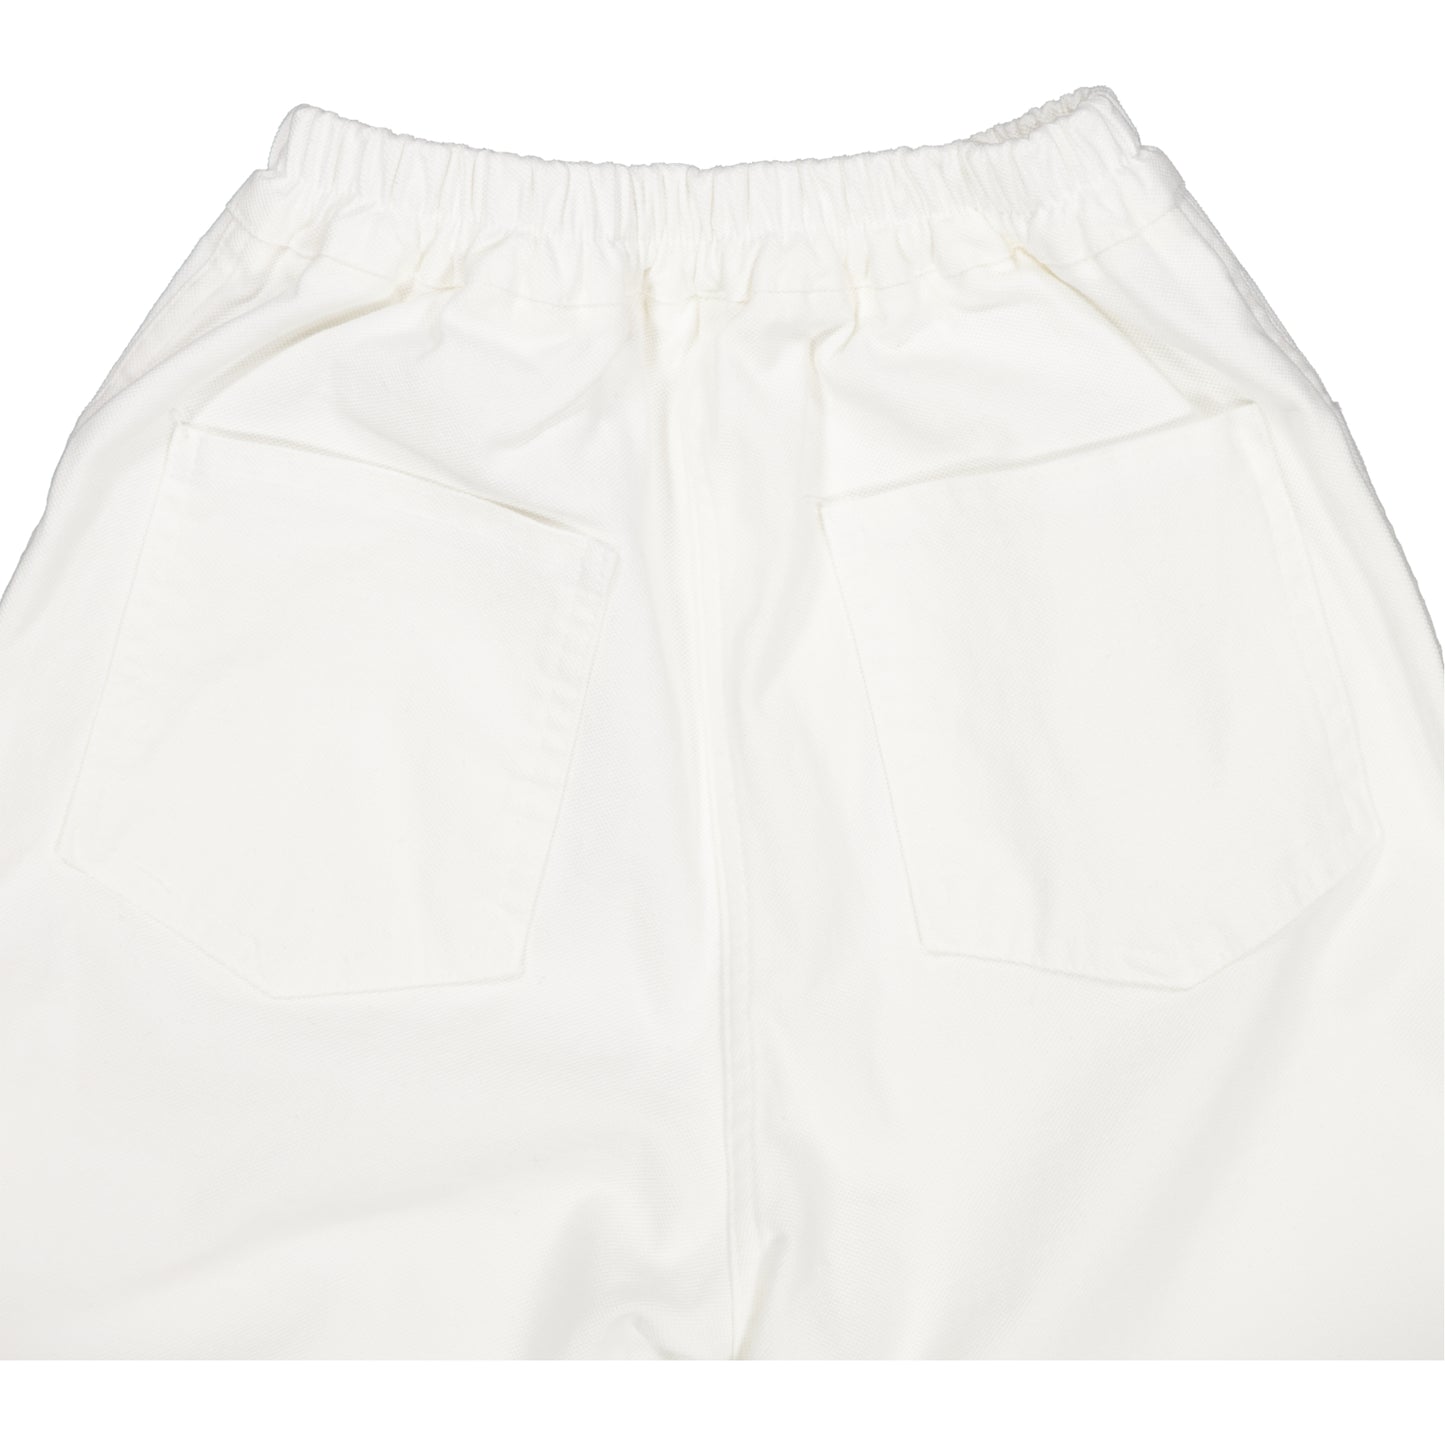 Pantalon coquelicot blanc